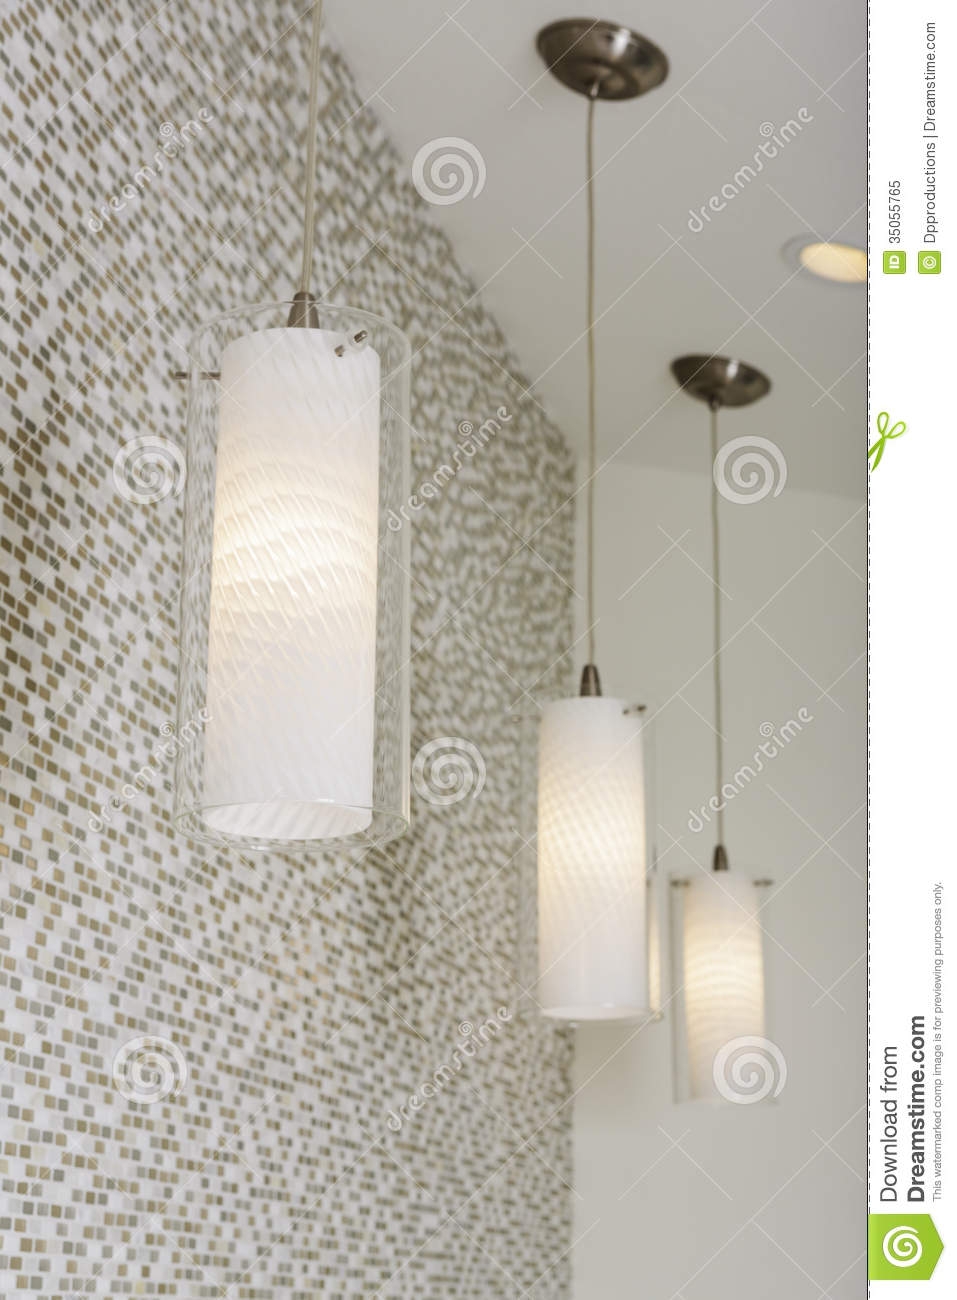 Ceiling Tile Lighting Fixtures Ceiling Tile Lighting Fixtures ceiling tile light fixtures ceilings 957 X 1300